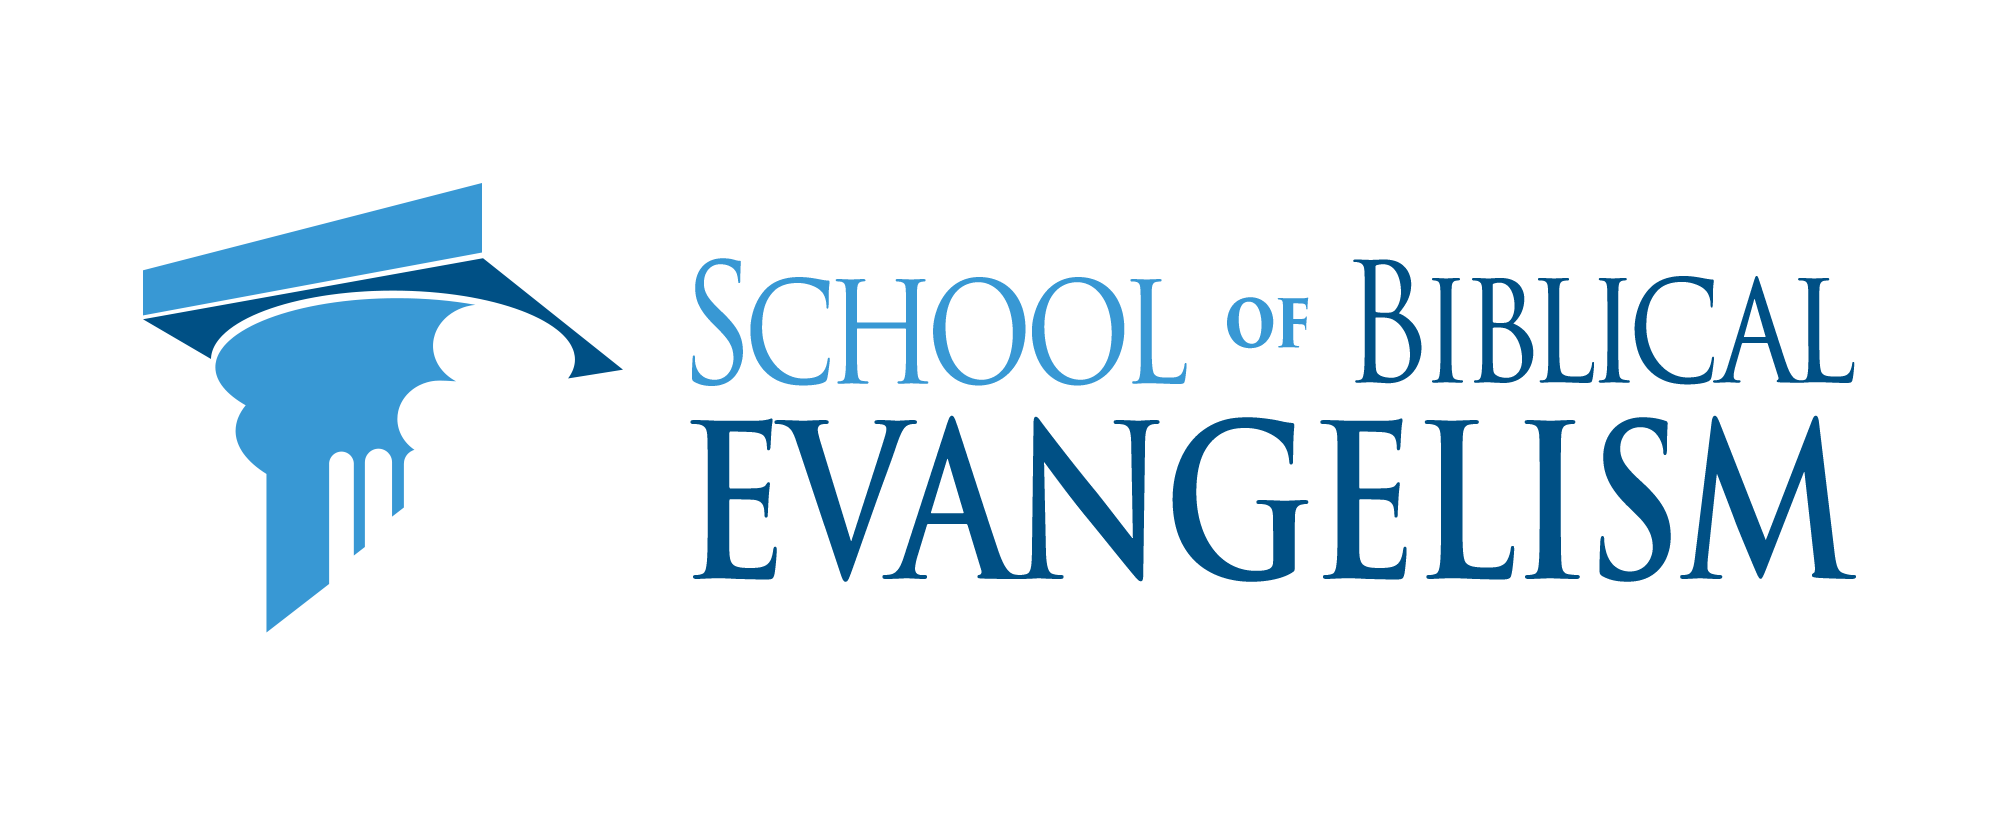 Evangelism Logo - Online School of Biblical Evangelism